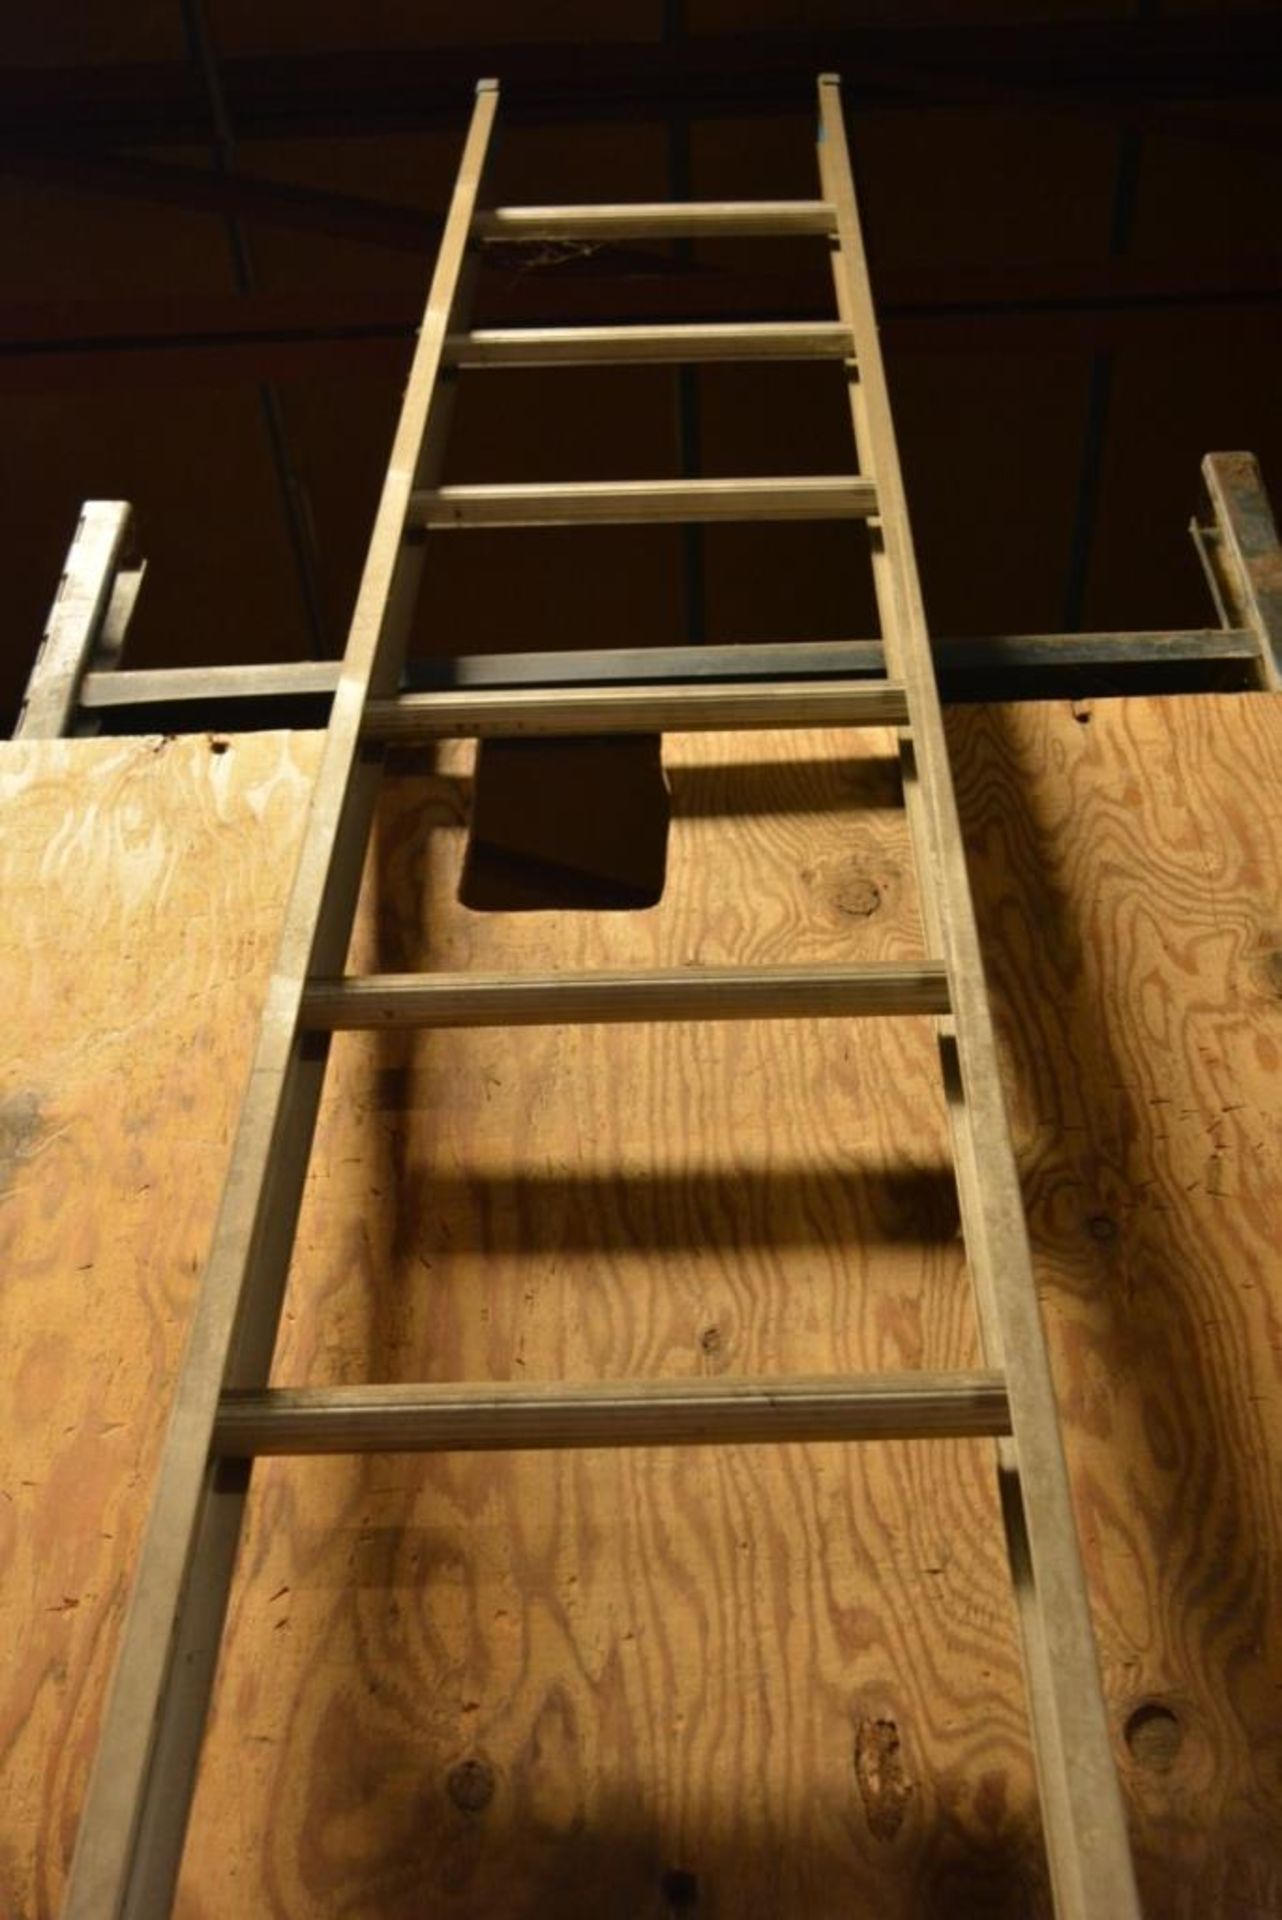 American 14' Aluminum Straight Ladder - Image 3 of 3